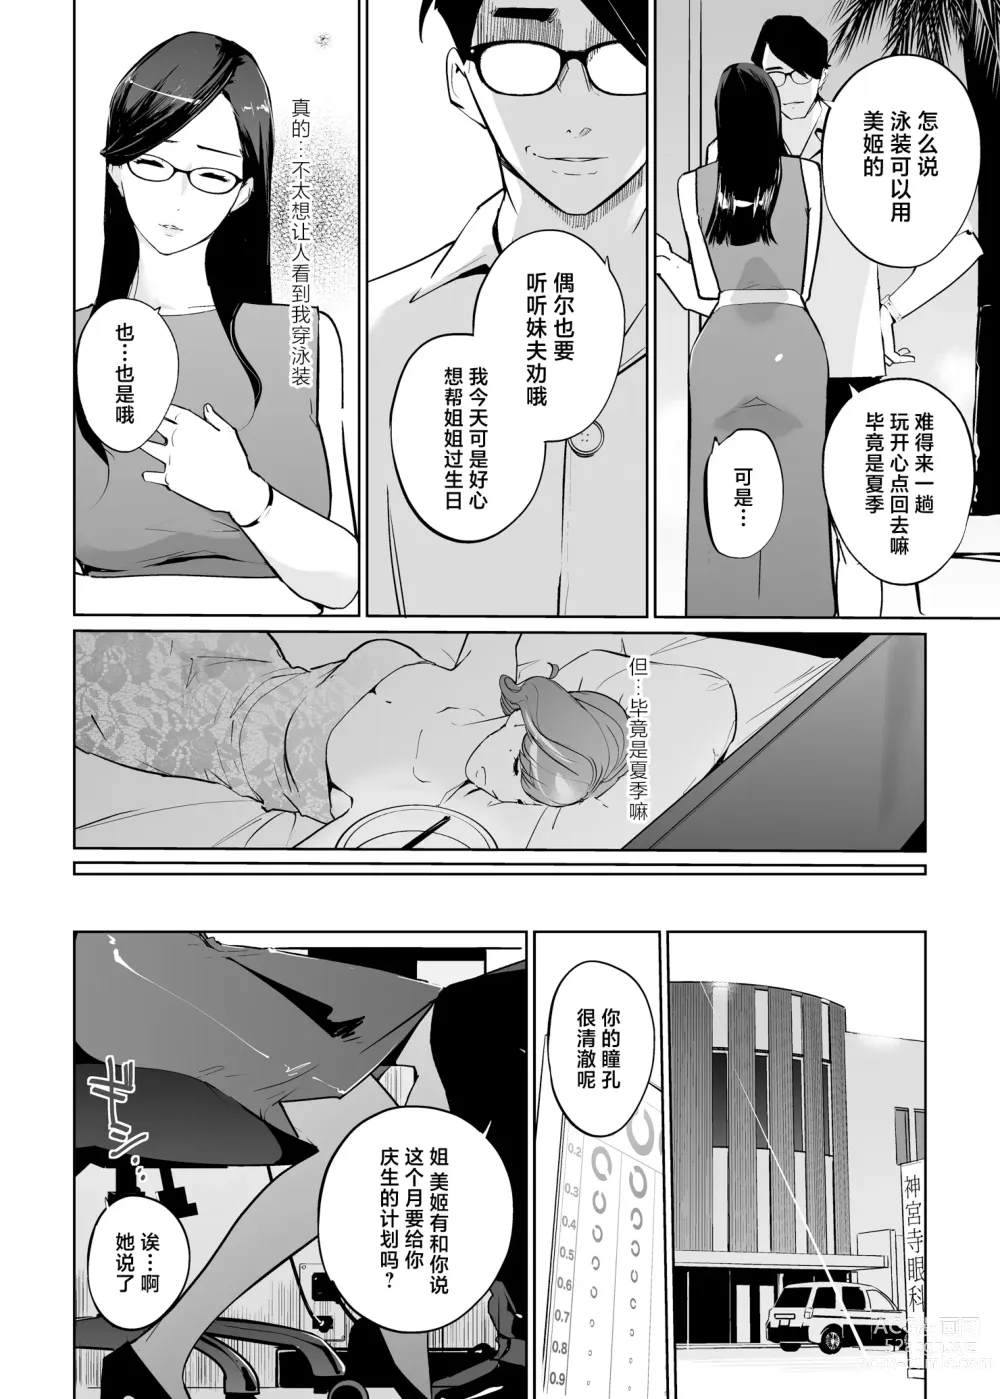 Page 10 of doujinshi NTR Midnight Pool Season 2 #1